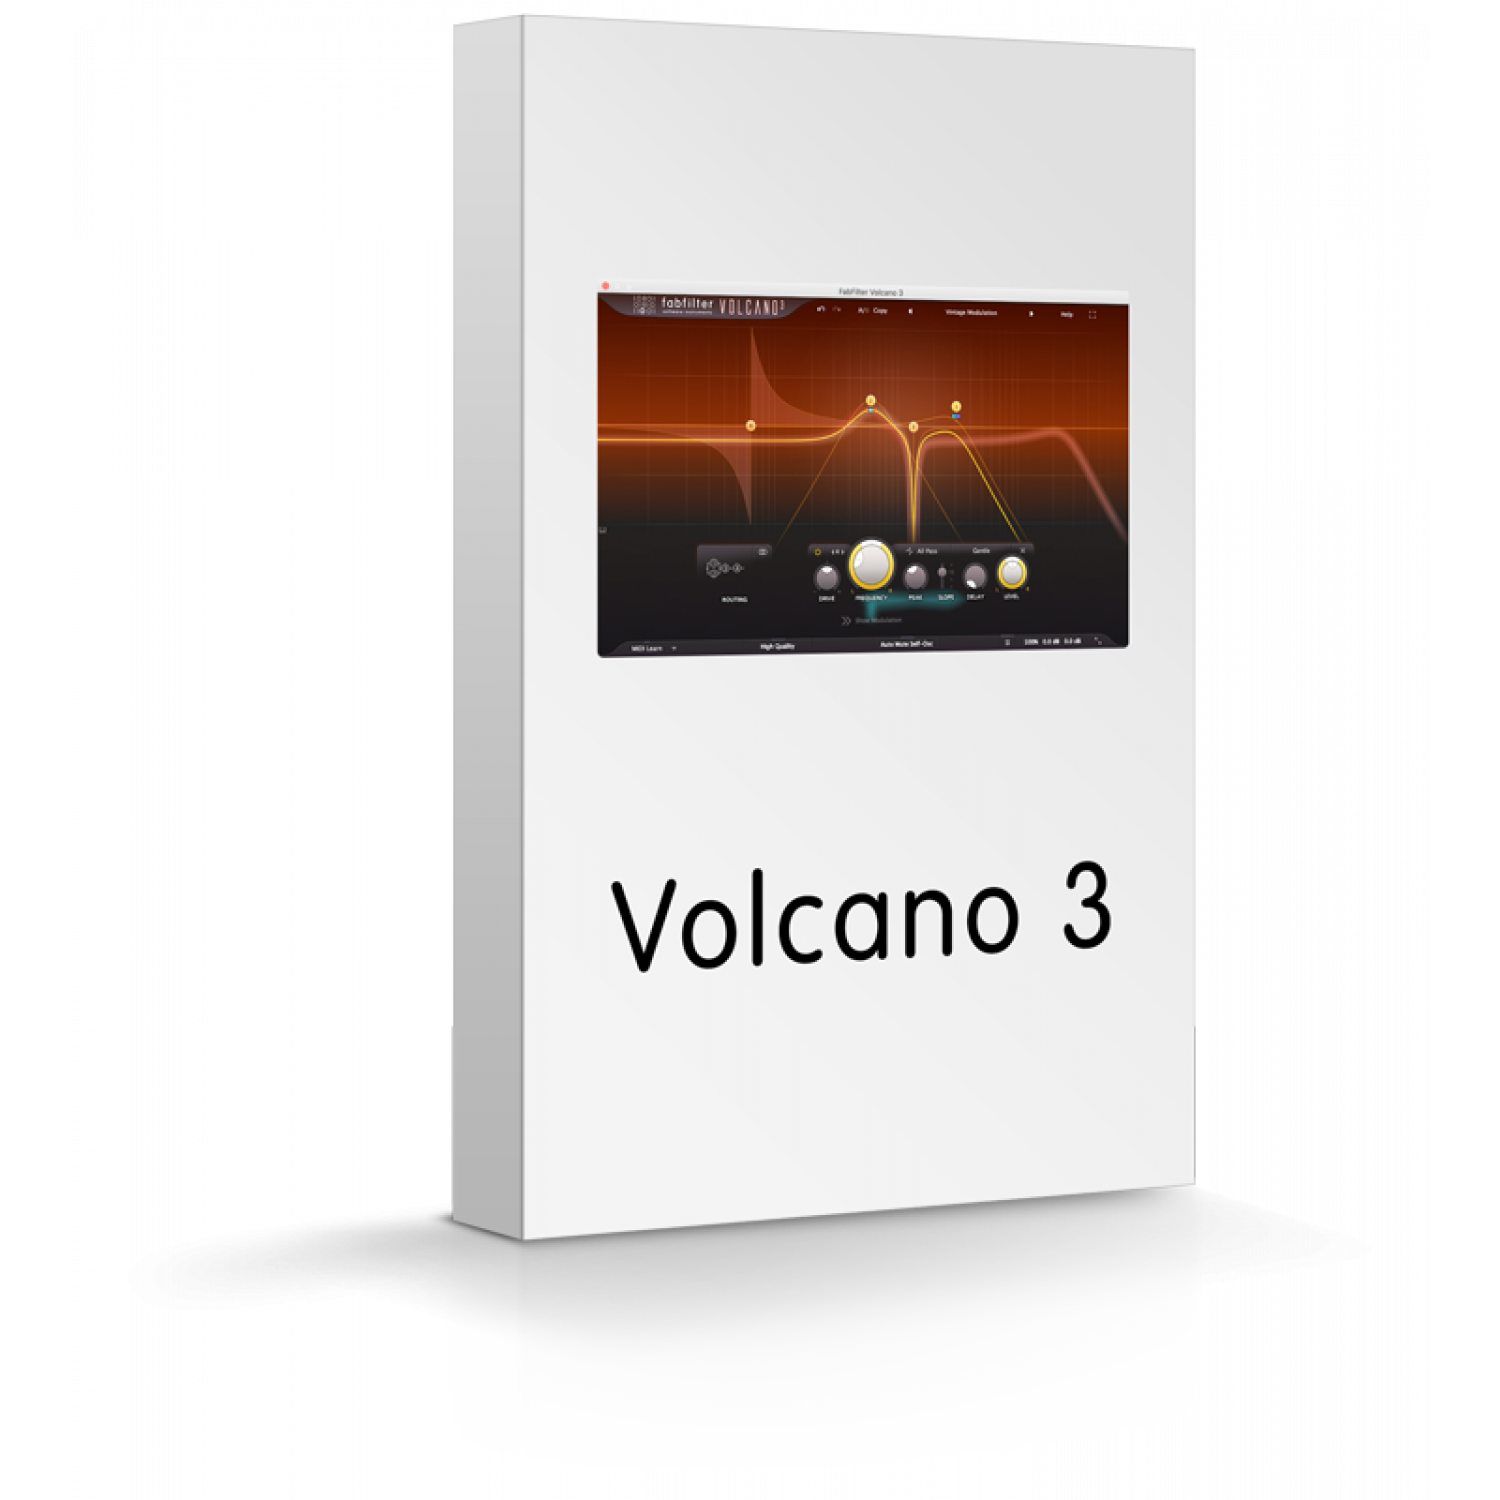 fabfilter volcano download